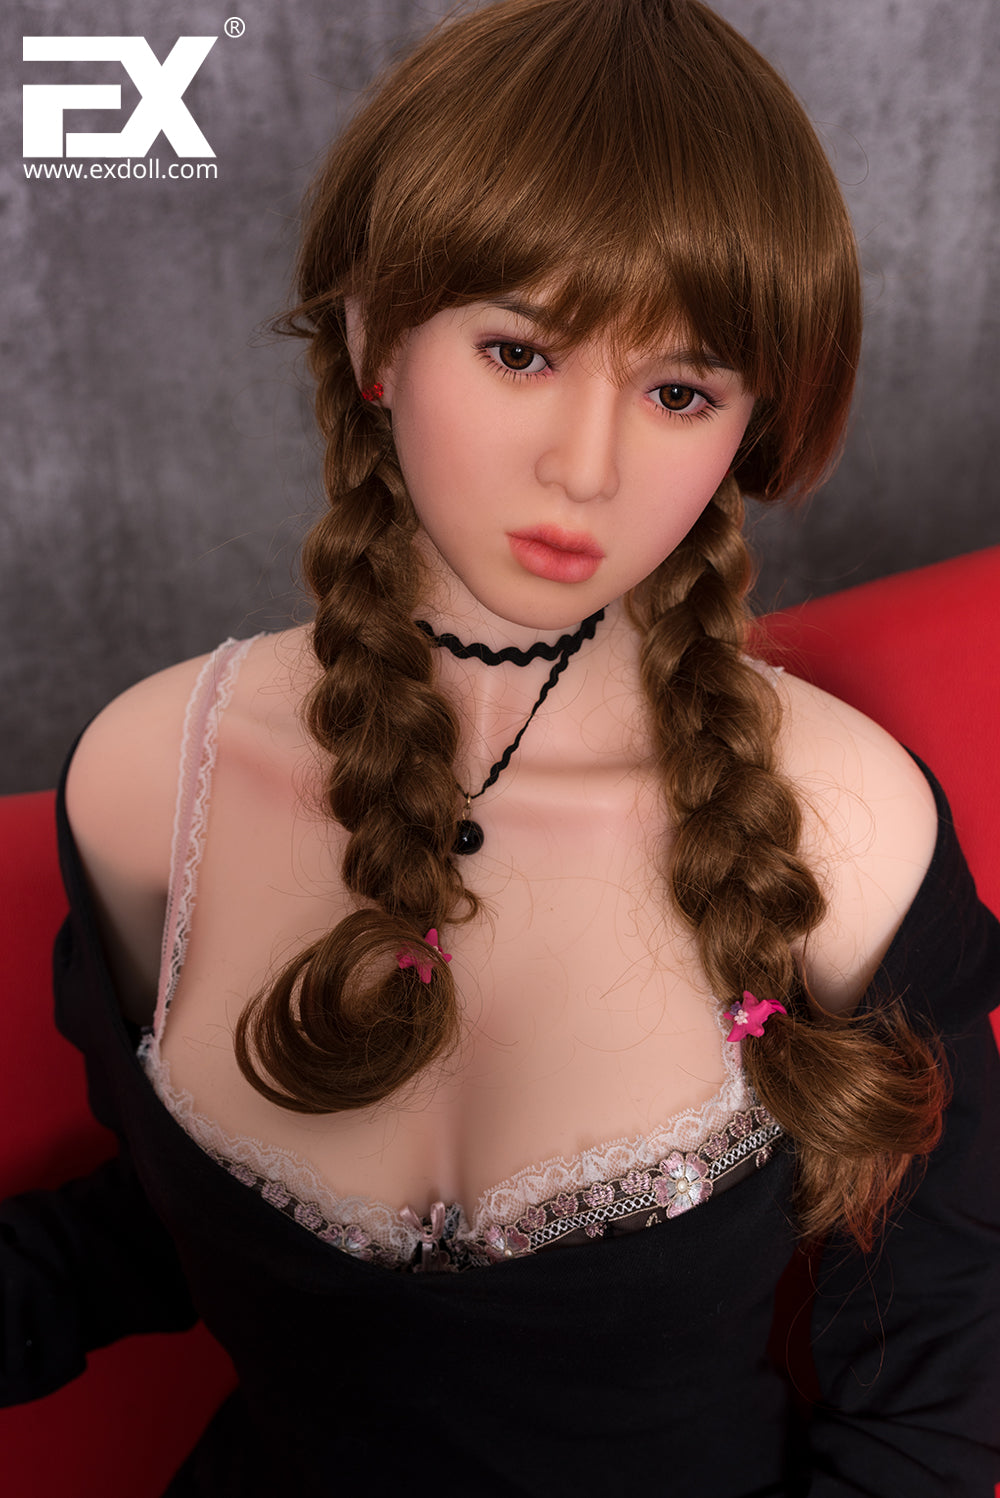 EX Doll Ukiyoe Series 170 cm Silicone - Hatsuha | Buy Sex Dolls at DOLLS ACTUALLY